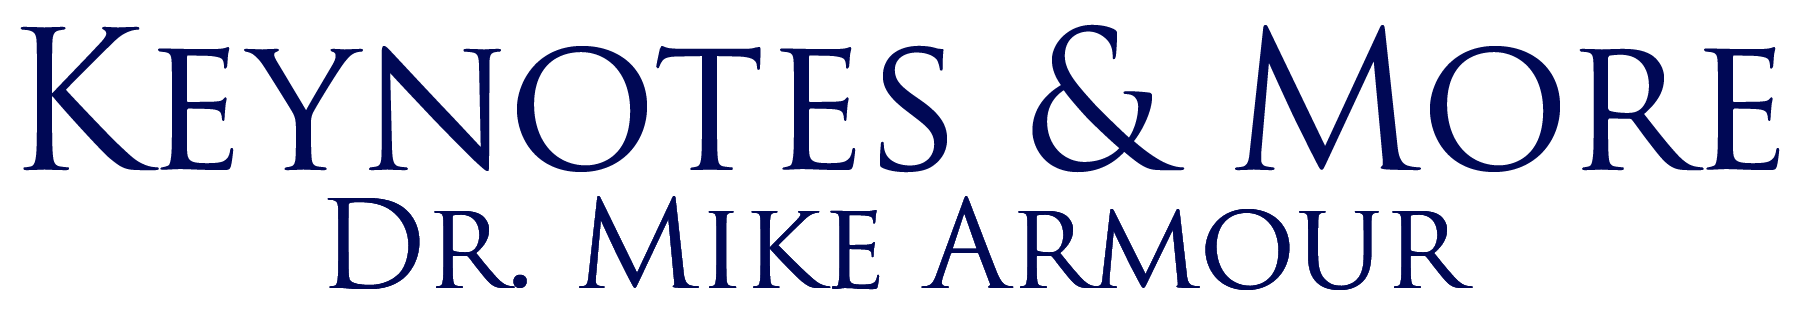 Keynotes & More logo, Dr. Mike Armour